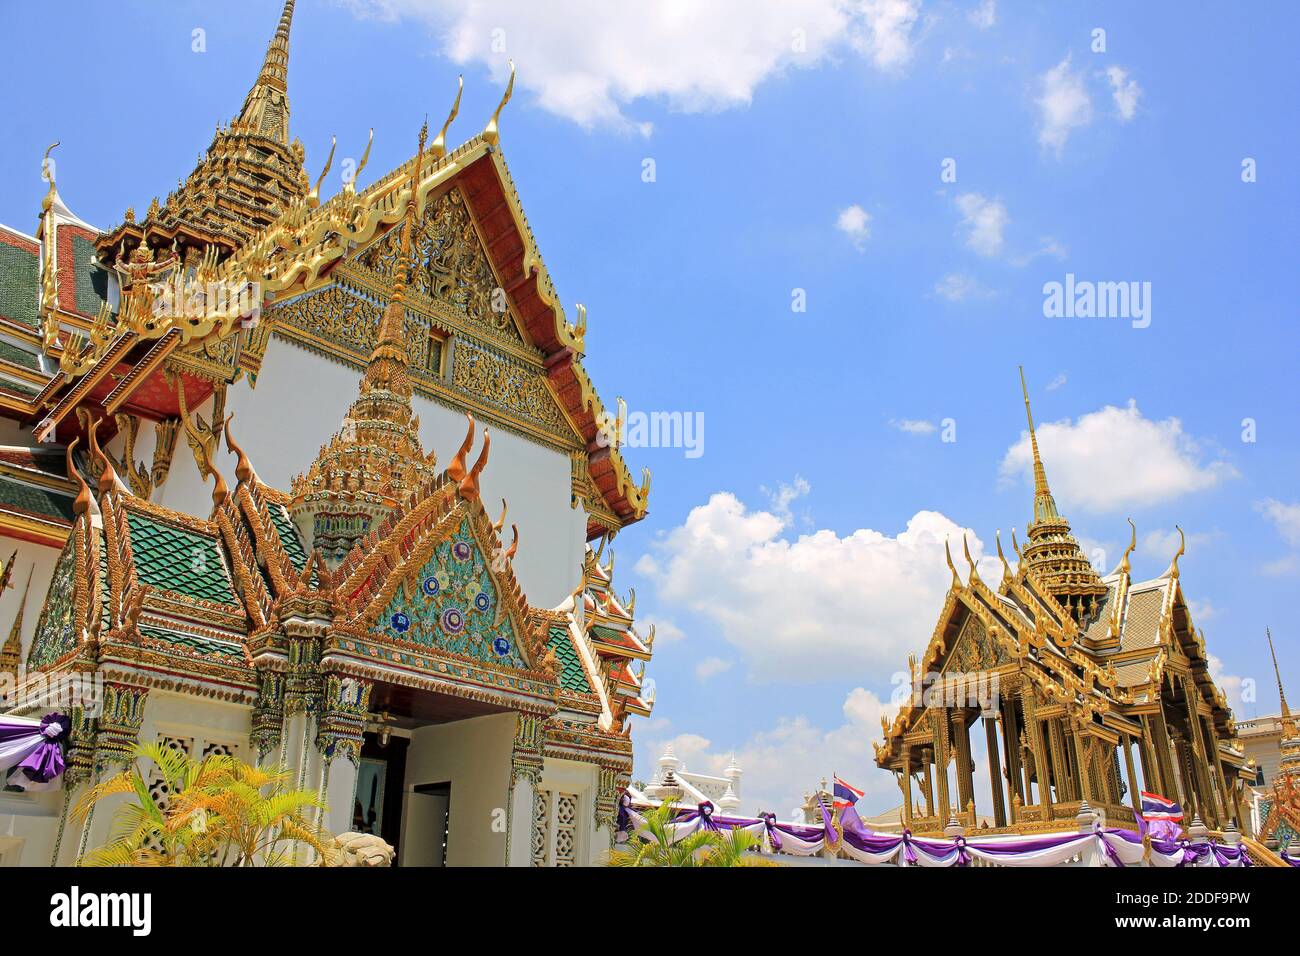 Wat Phra Kaew - Grand Palace Bangkok Thailand Stock Photo